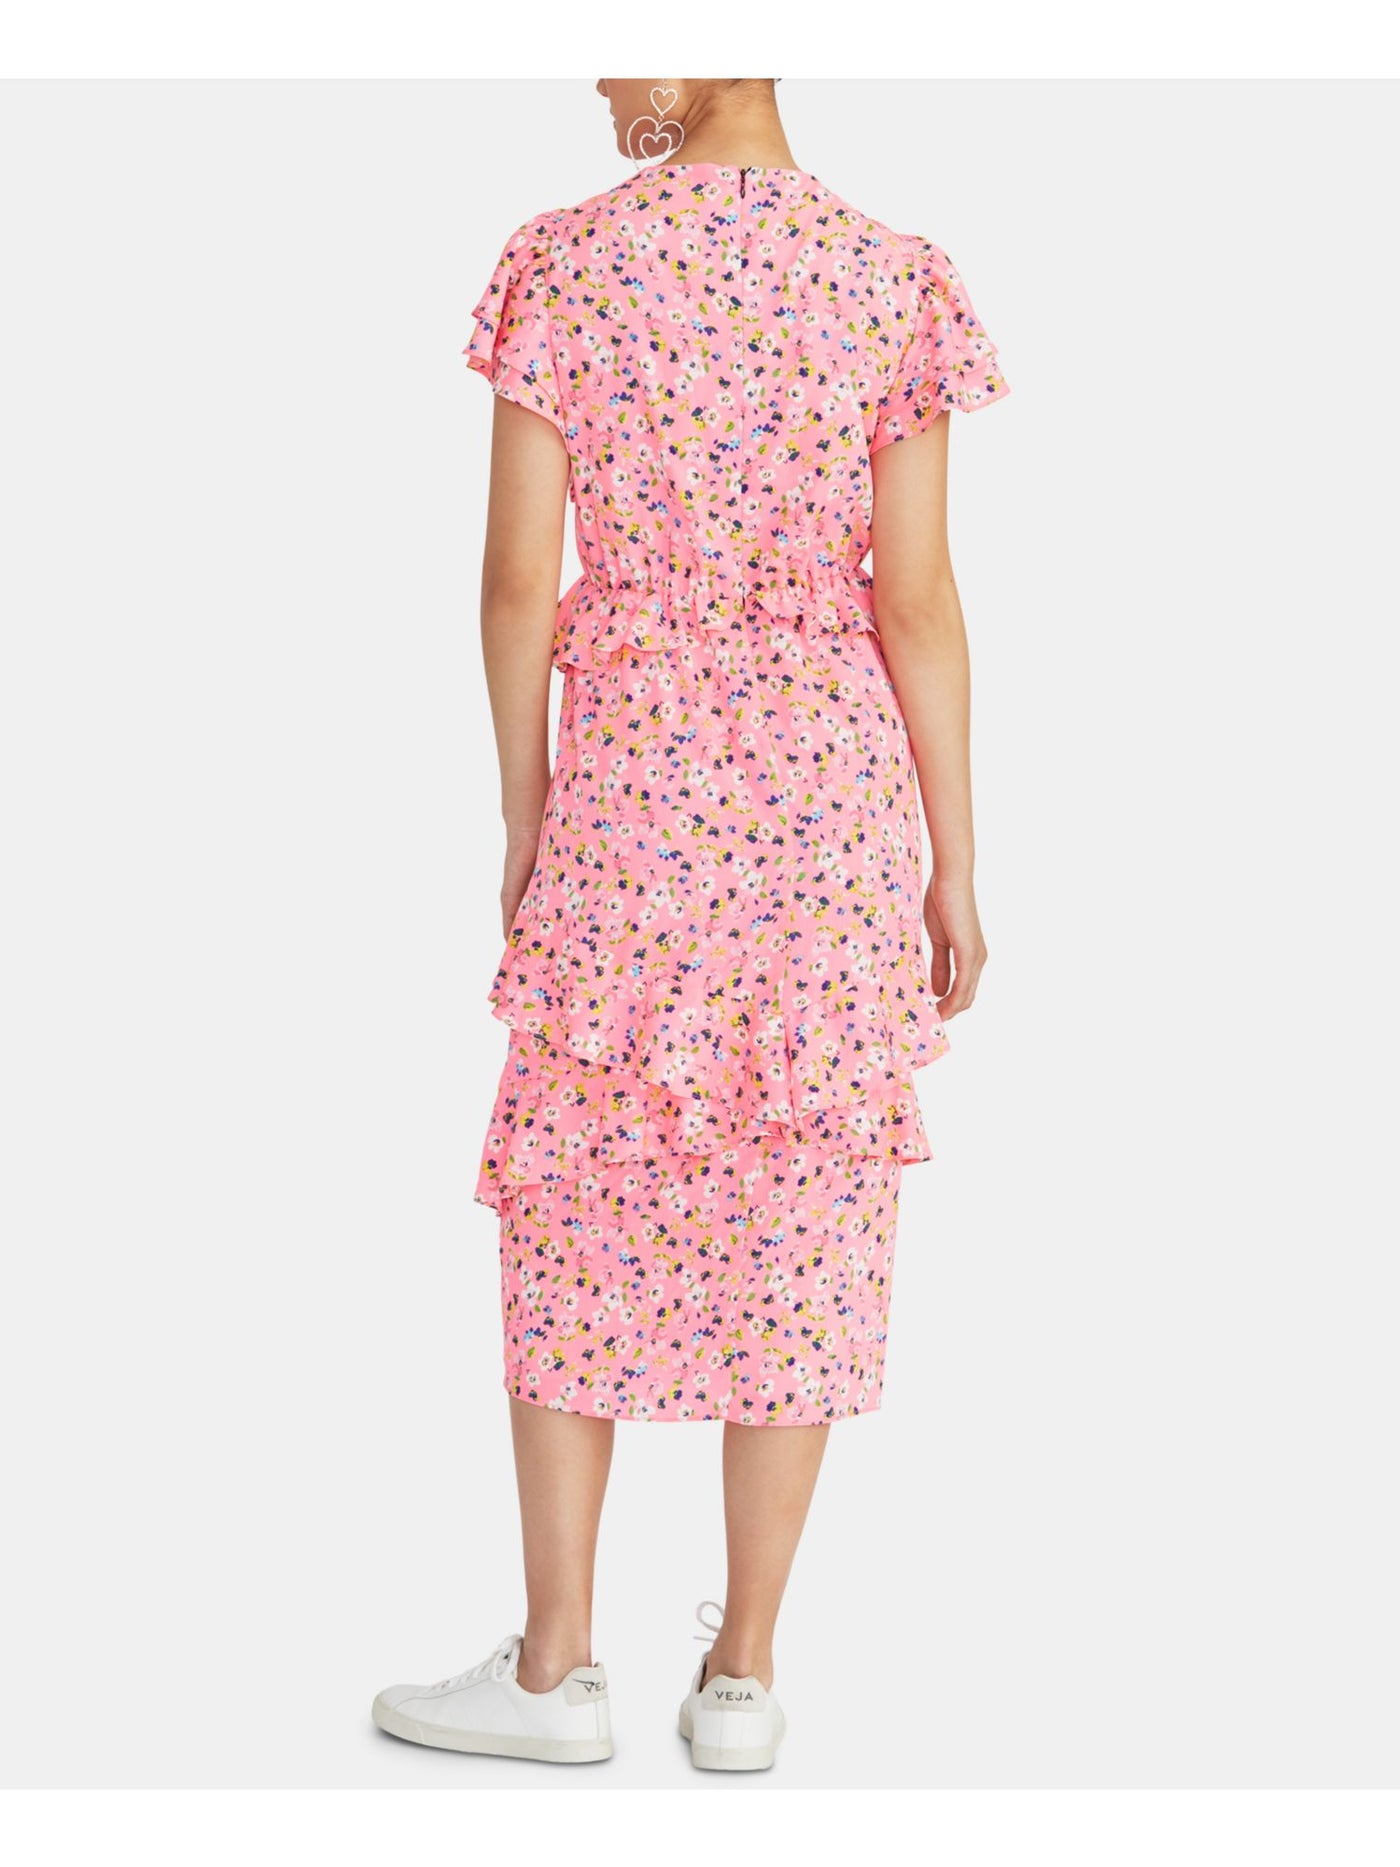 RACHEL ROY Womens Pink Ruffled Floral Short Sleeve V Neck Tea-Length Sheath Dress 2